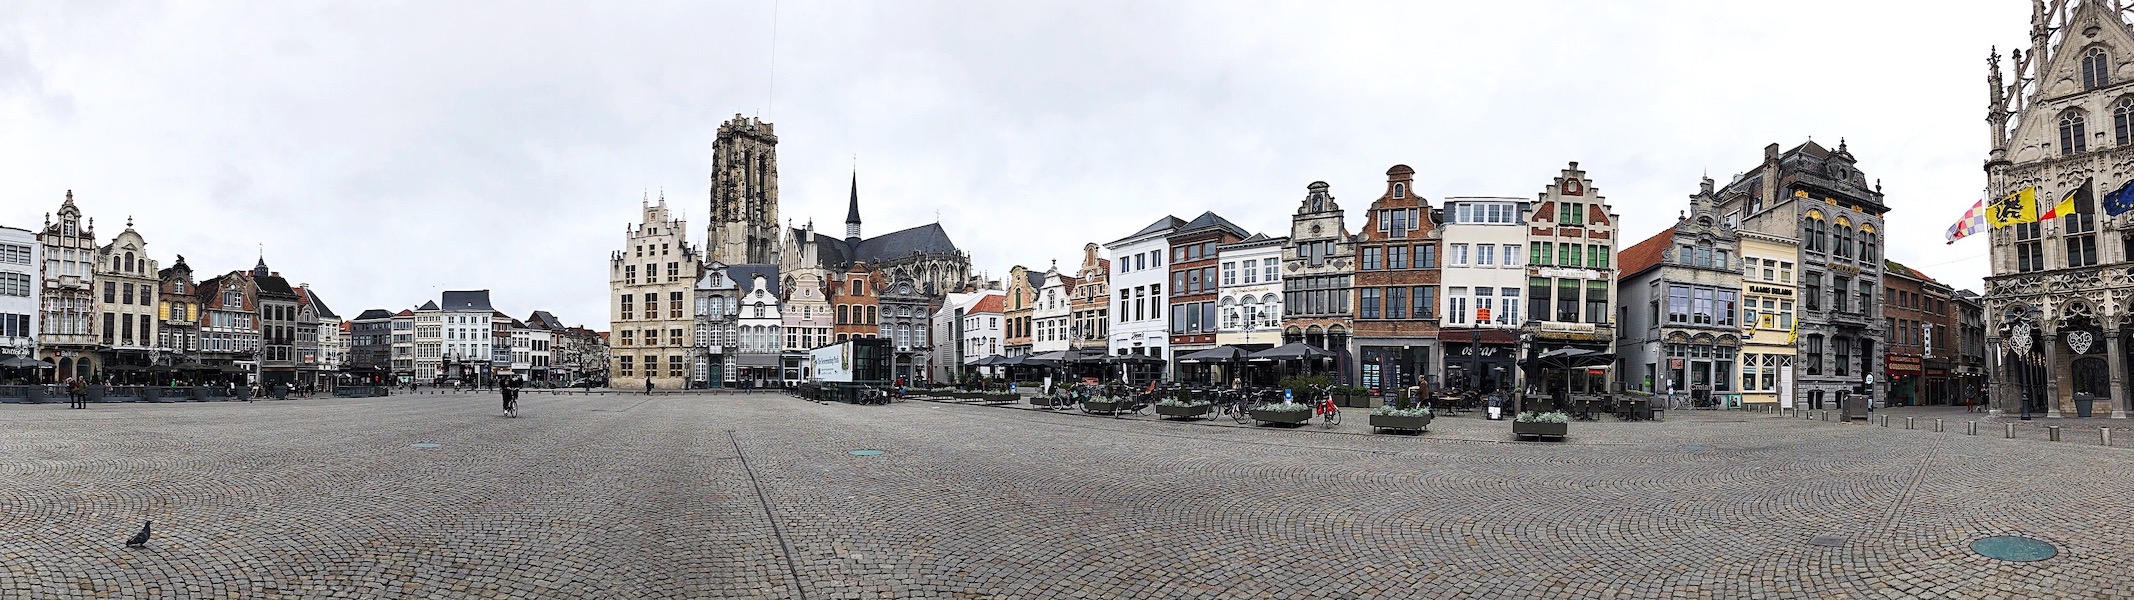 Mechelen Grote Markt Panorama Guide to Mechelen